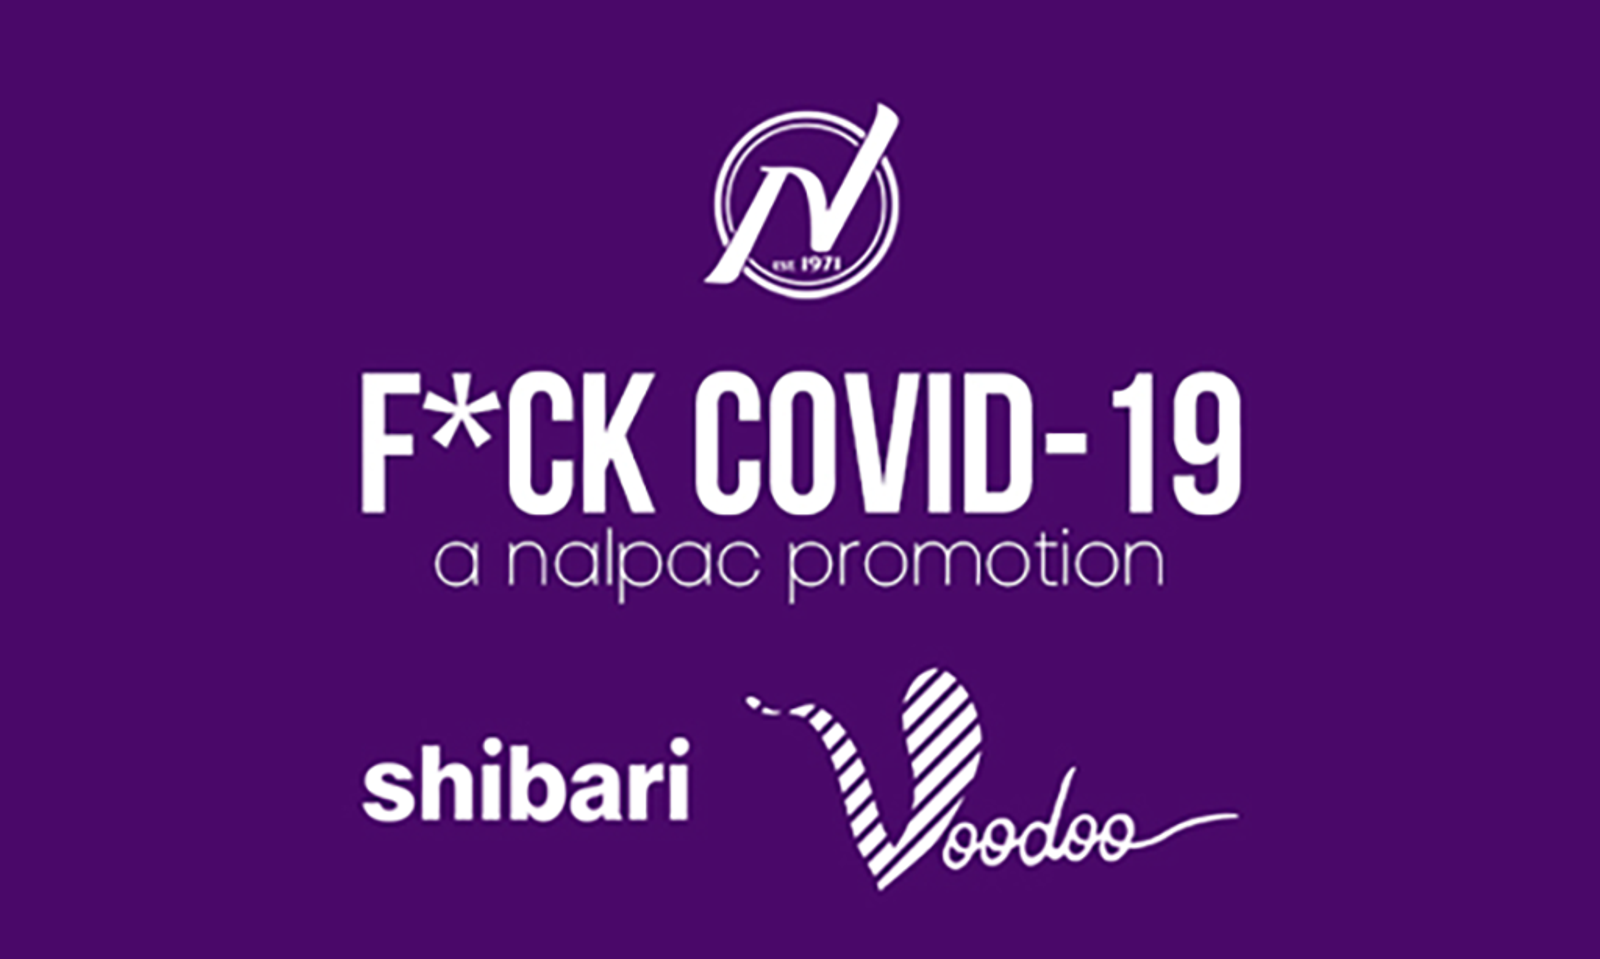 Nalpac F*ck Covid19 Campaign Features Shibari & Voodoo in Week 10